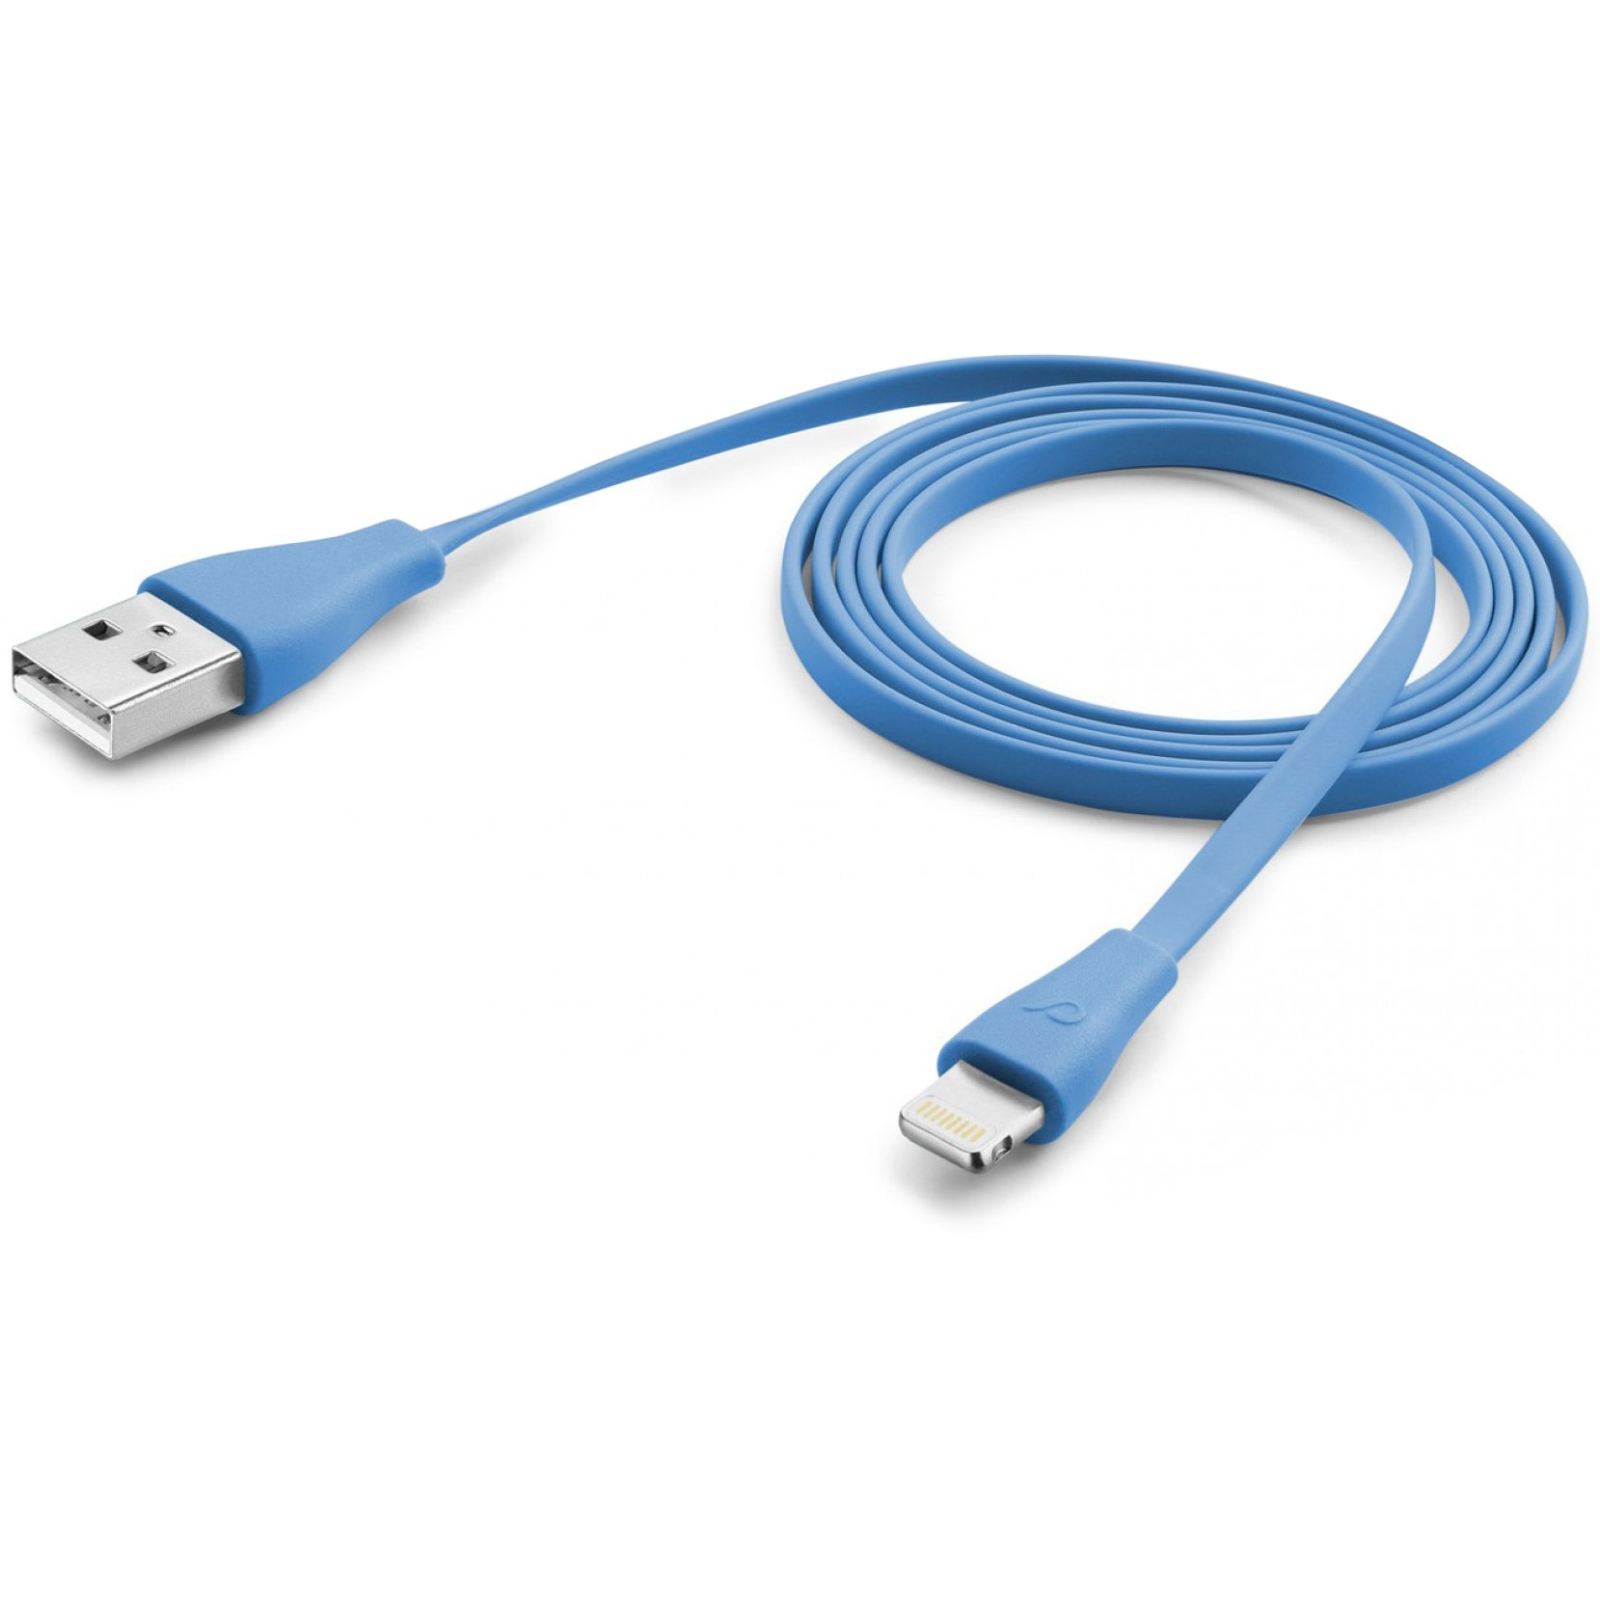 Дата кабель USB 2.0 AM to Micro 5P 1.0m blue Cellularline (USBDATACMICROUSBB)